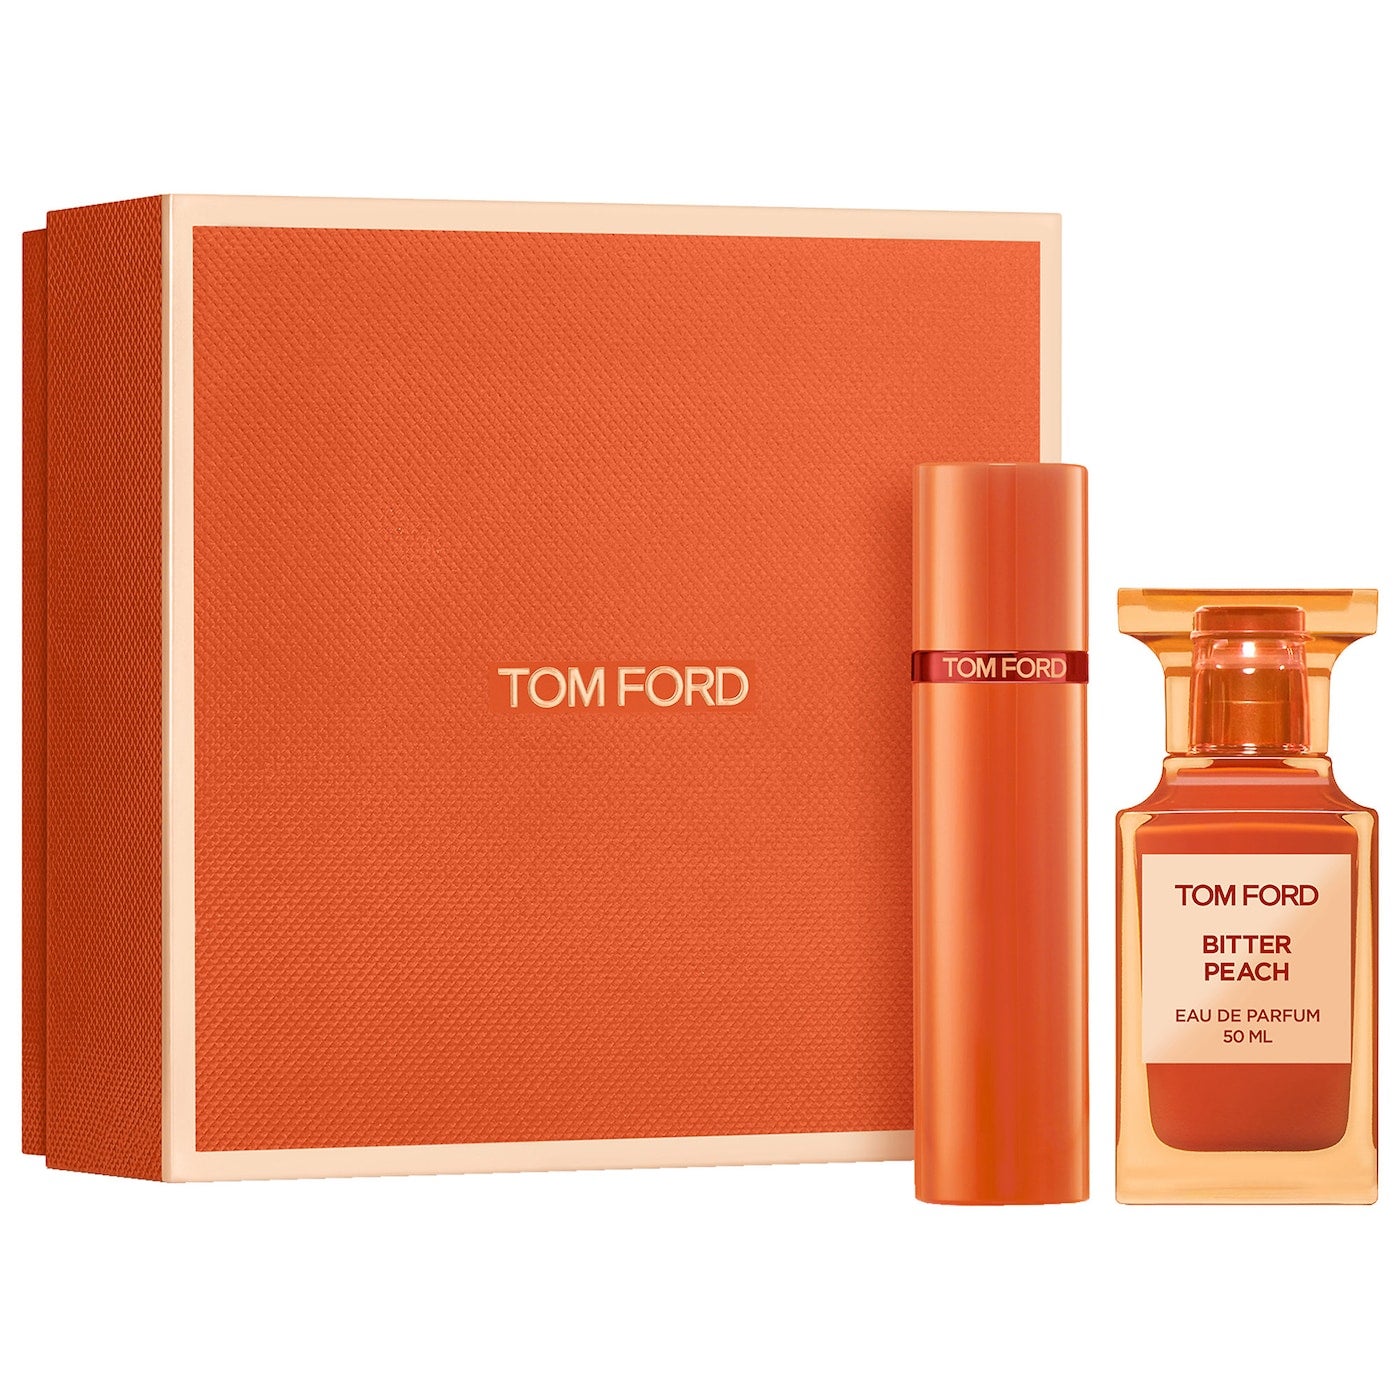 Tom Ford + Bitter Peach Eau de Parfum Set